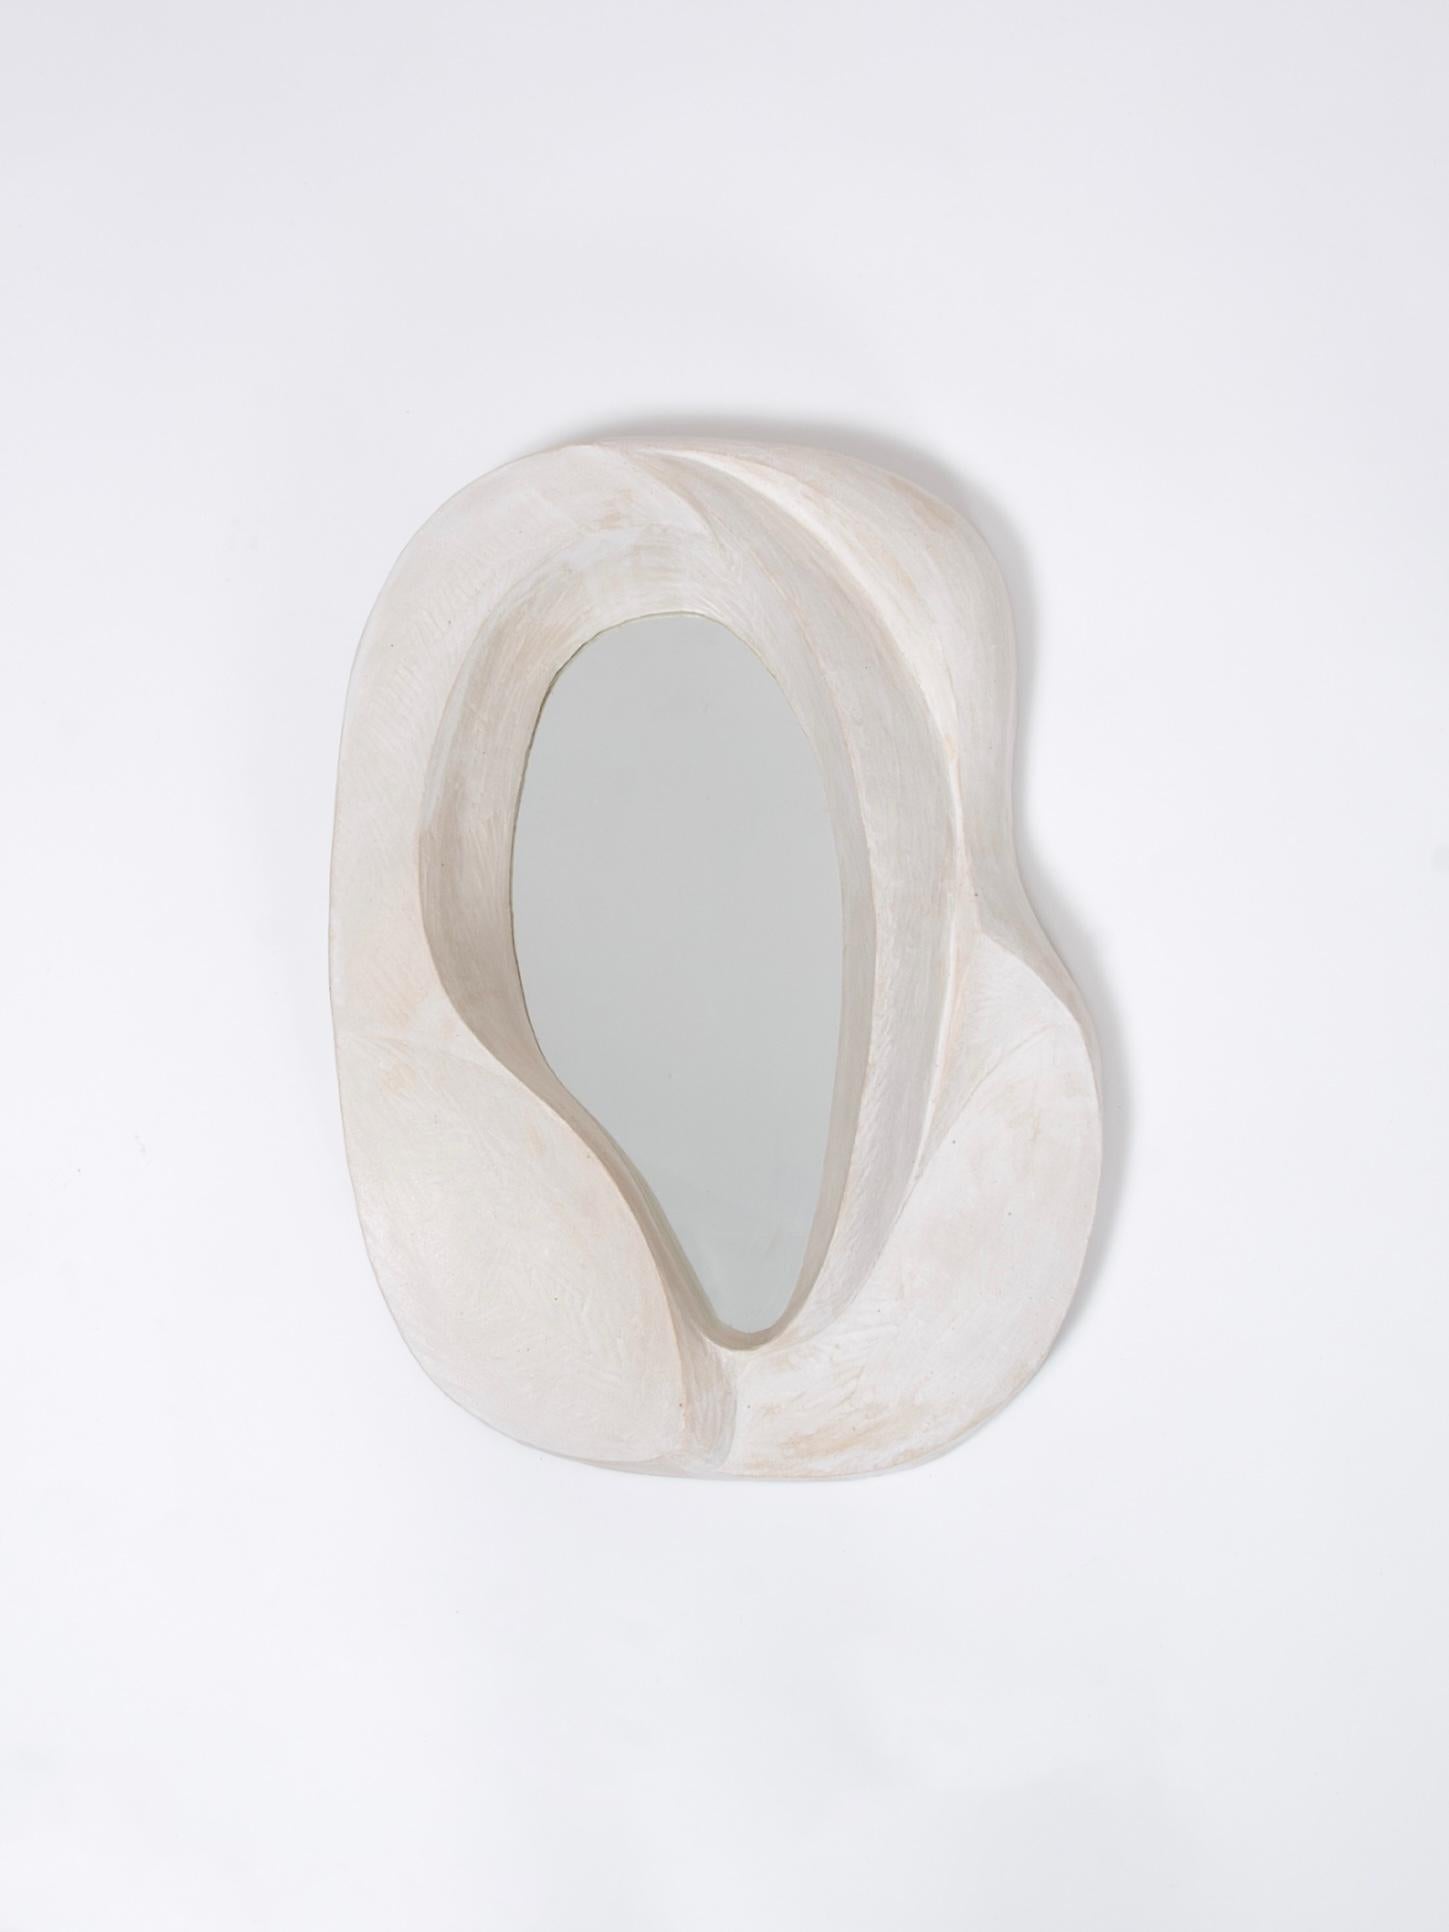 French Contemporary Ceramic Mirror by Natasha Dakhli For Sale